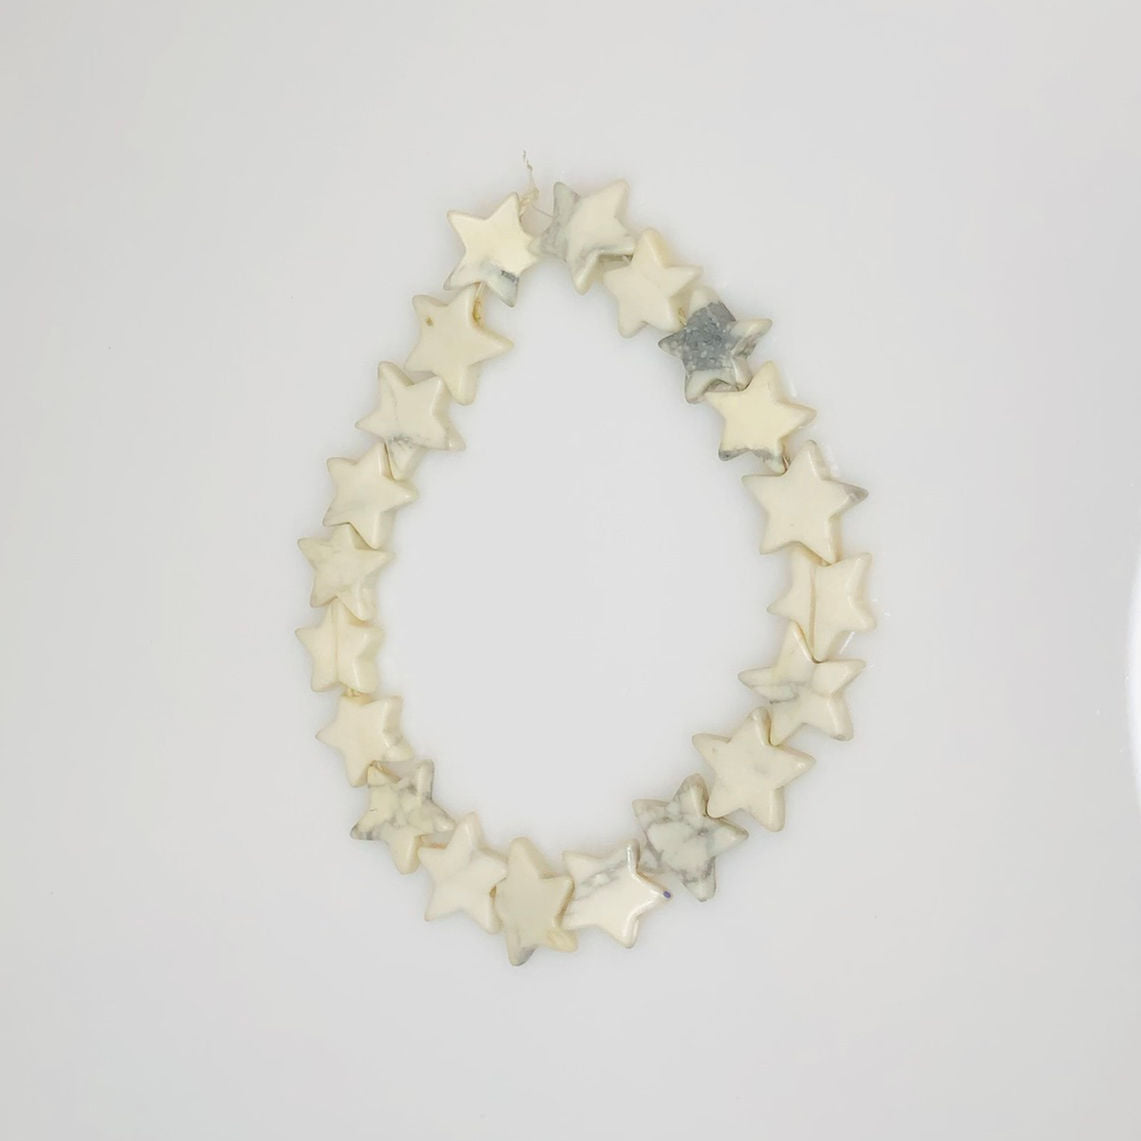 Howlite Semi-Precious Stone Star Beads, 12 mm - 20 Beads